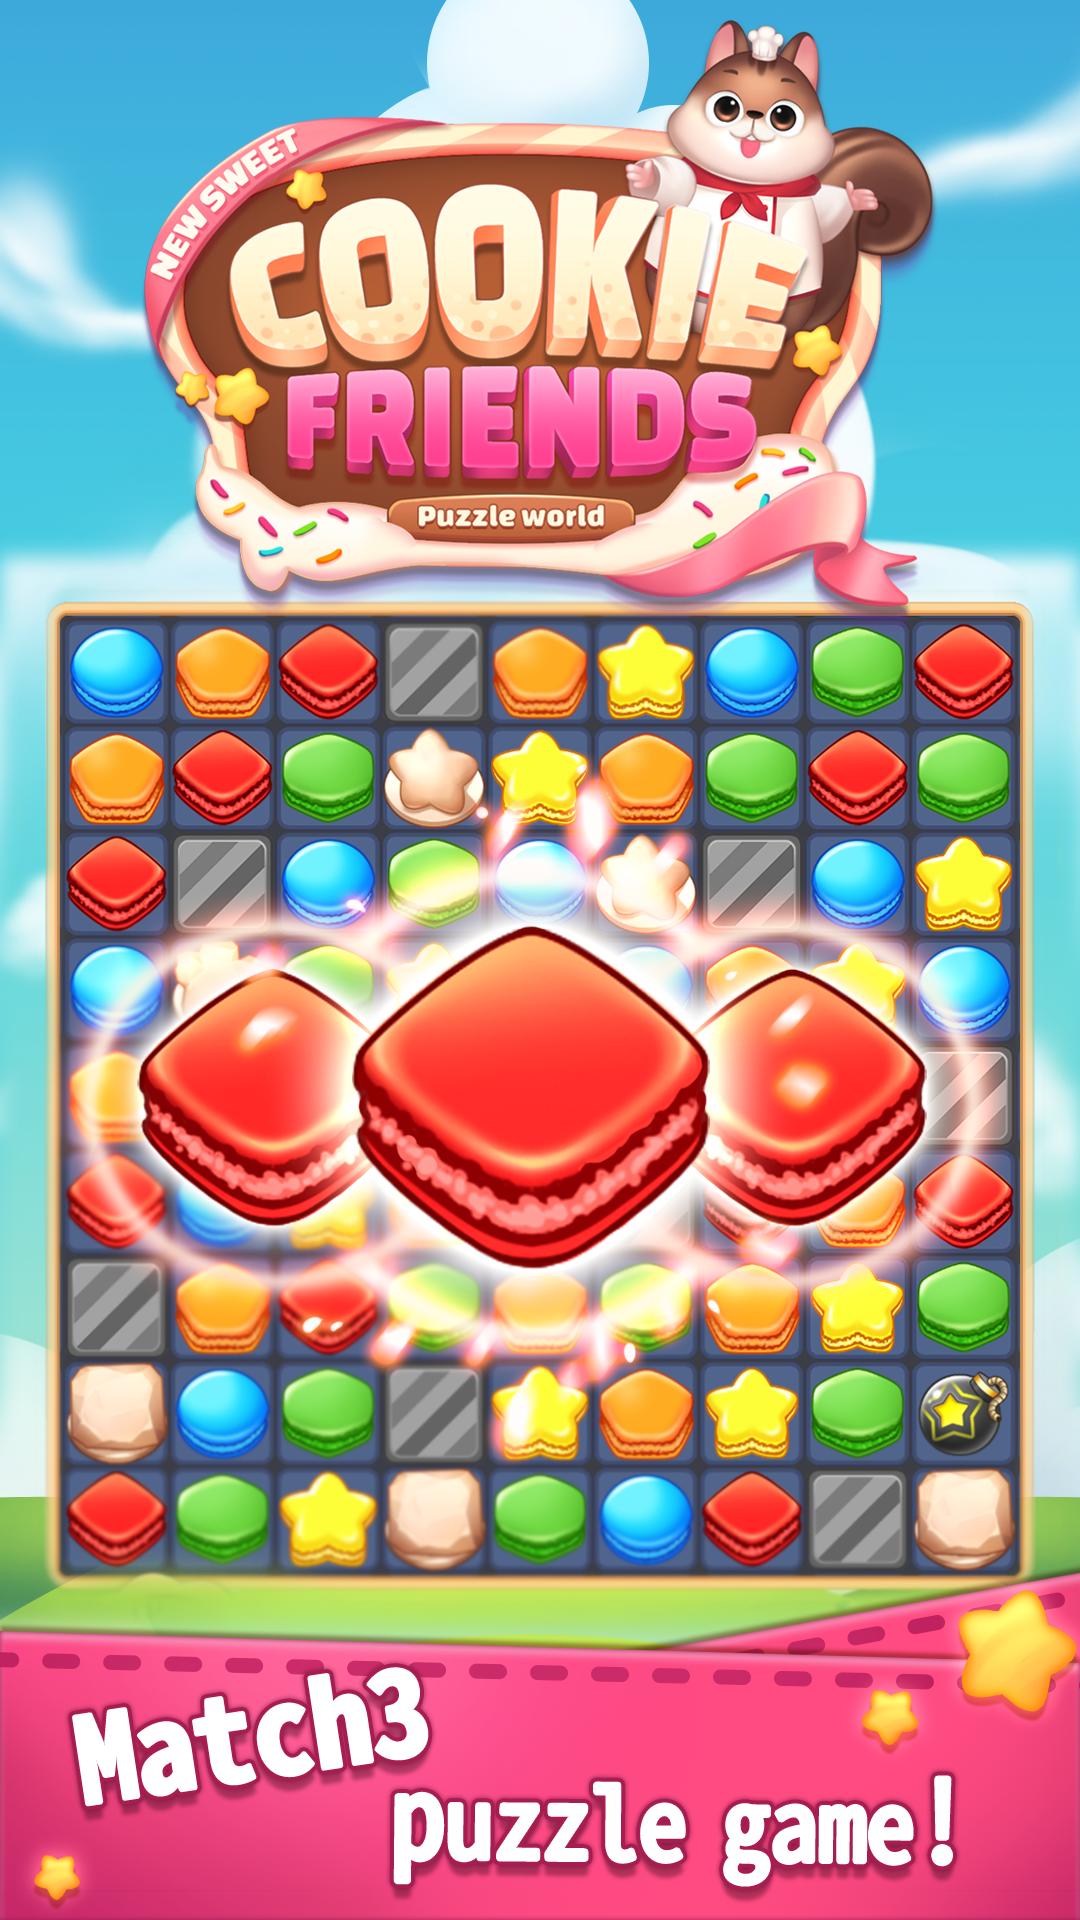 skjorte lærebog offer New Sweet Cookie Friends: Puzzle World for Android - APK Download